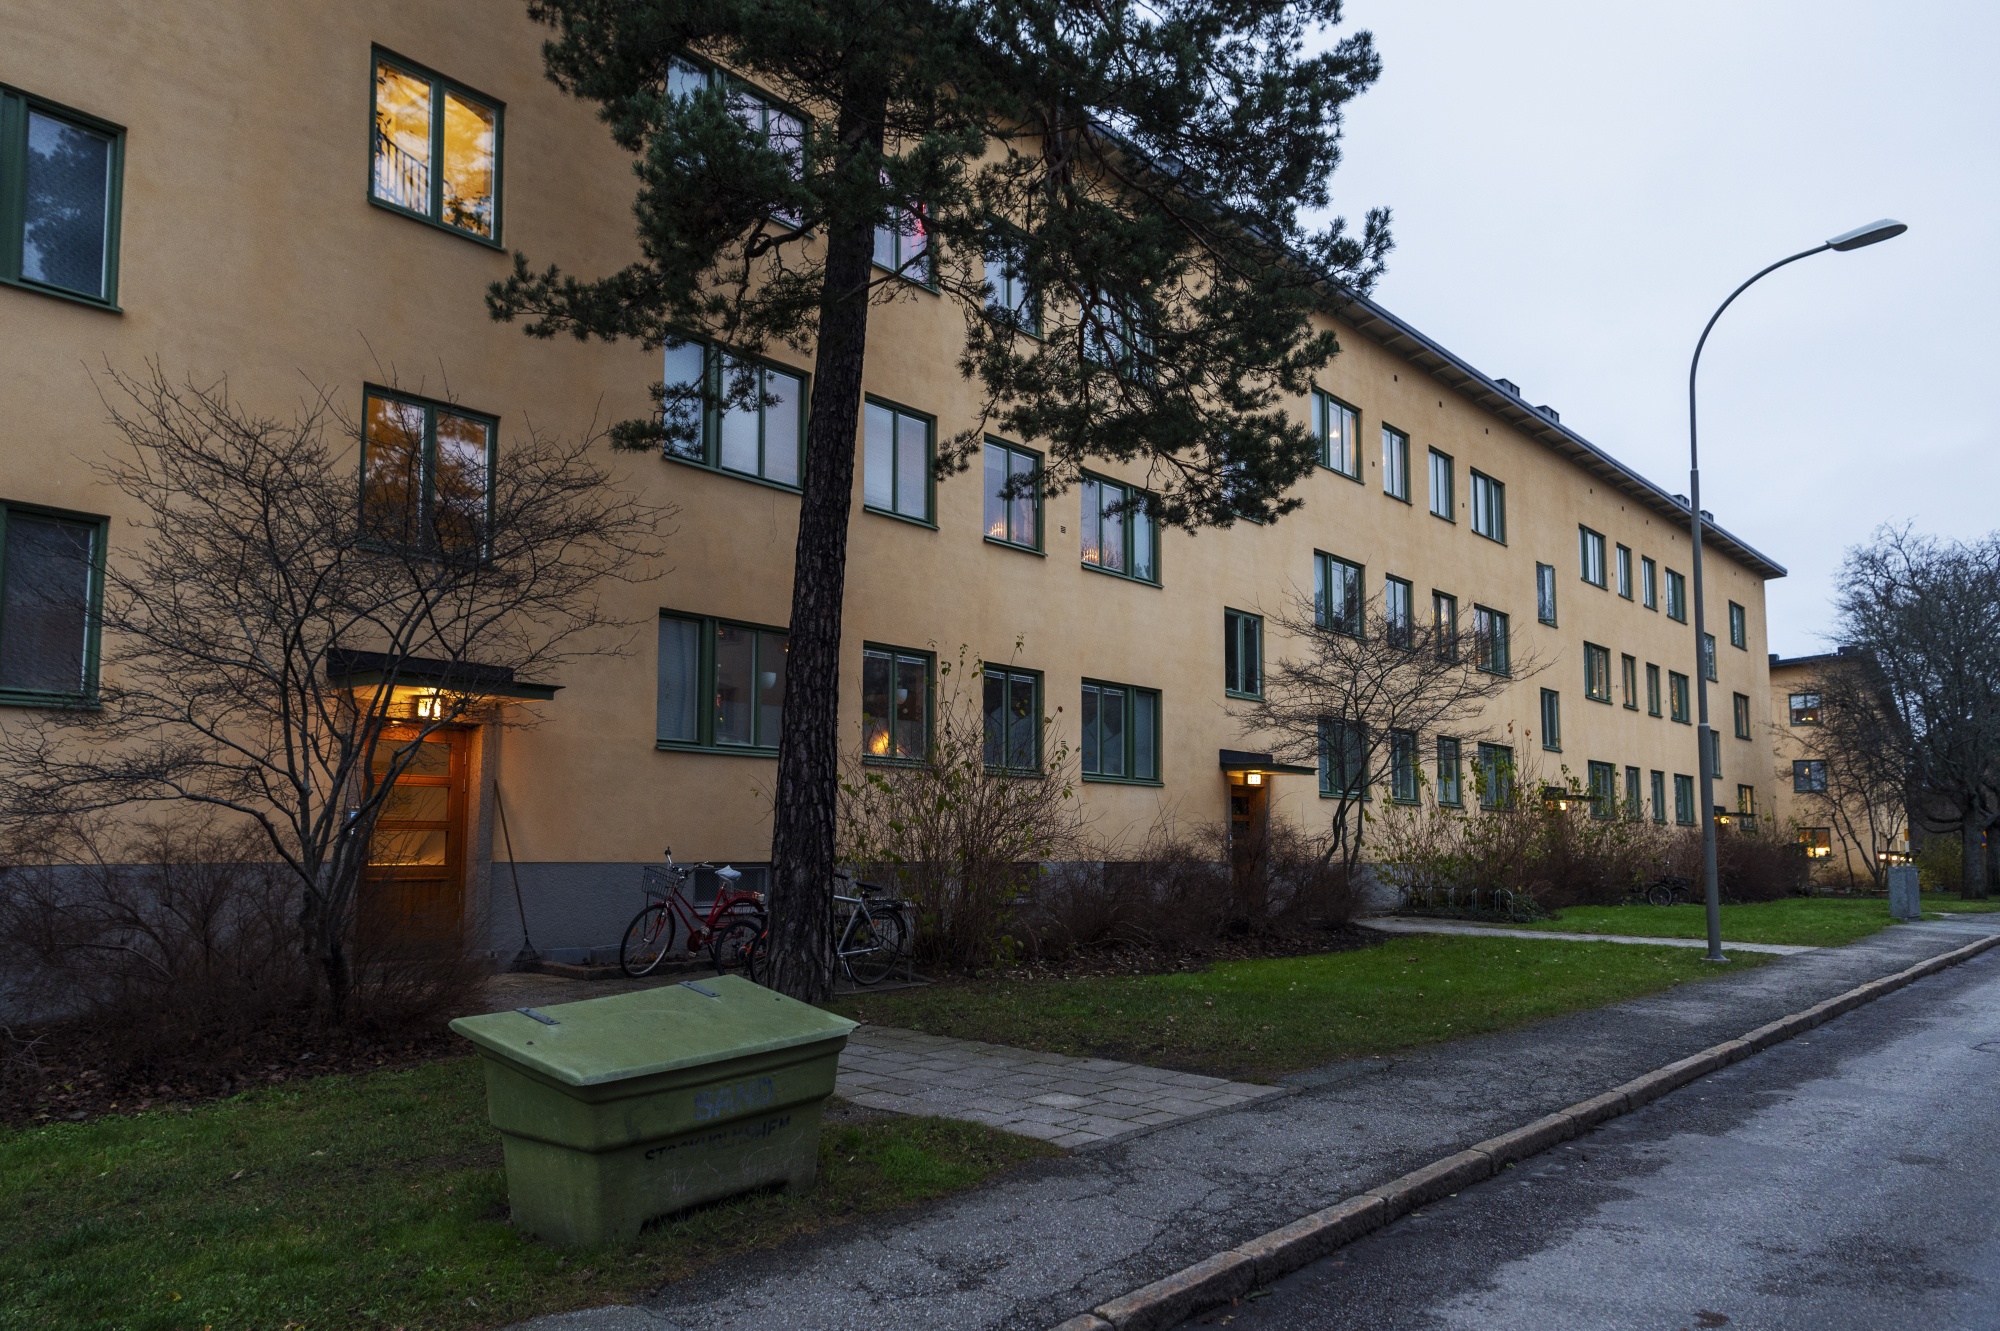 Barnrikehus at Hasselquistvagen in the&nbsp;Hammarbyhöjden neighborhood&nbsp;in southern Stockholm on Dec. 7.